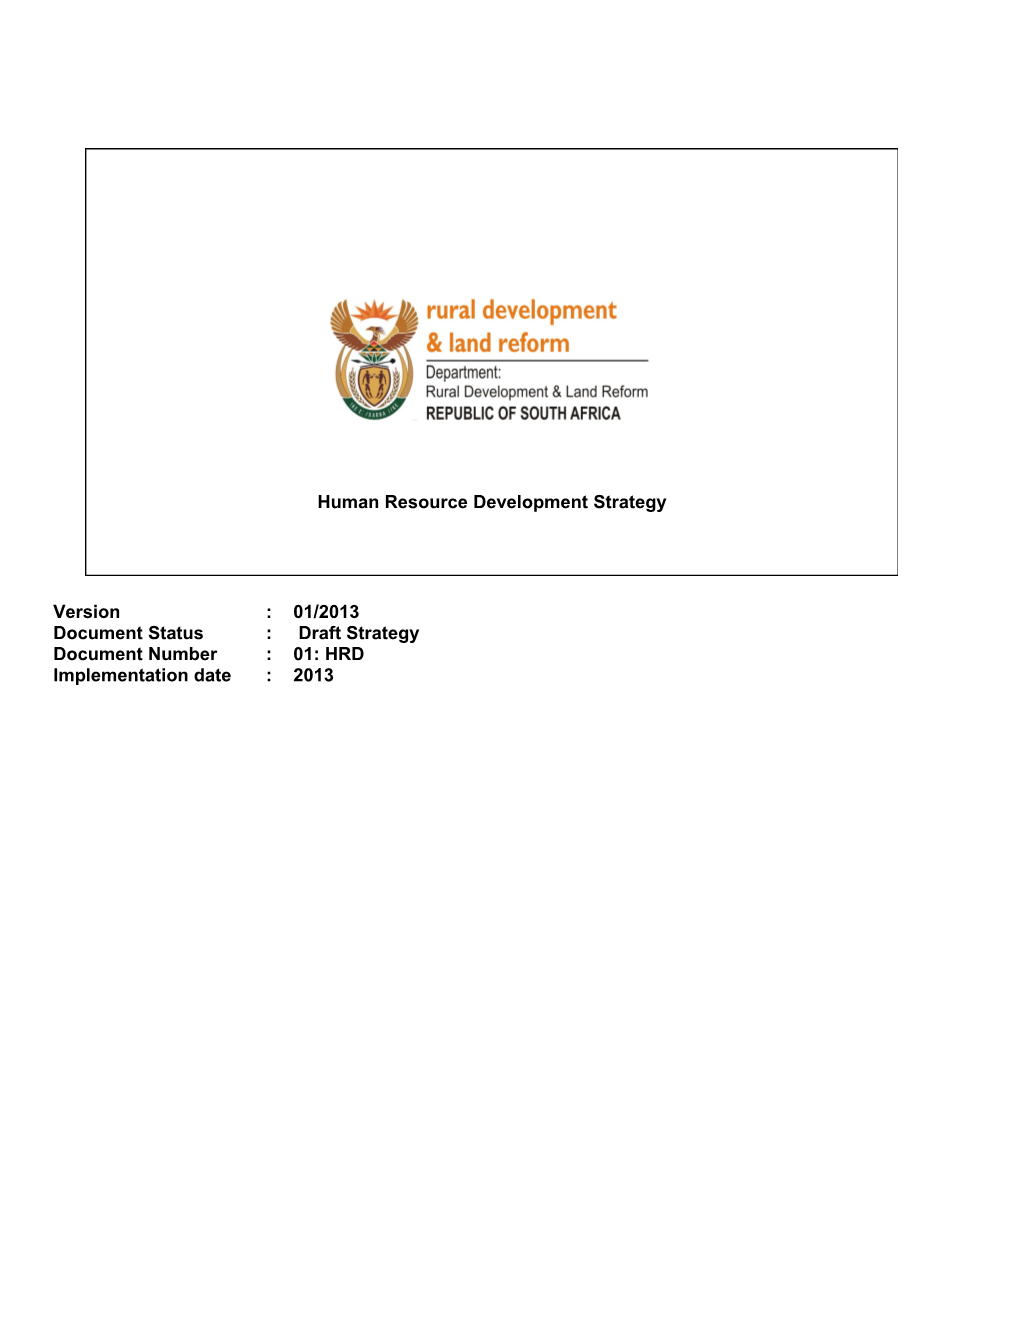 Human Resource Development Policy Framework